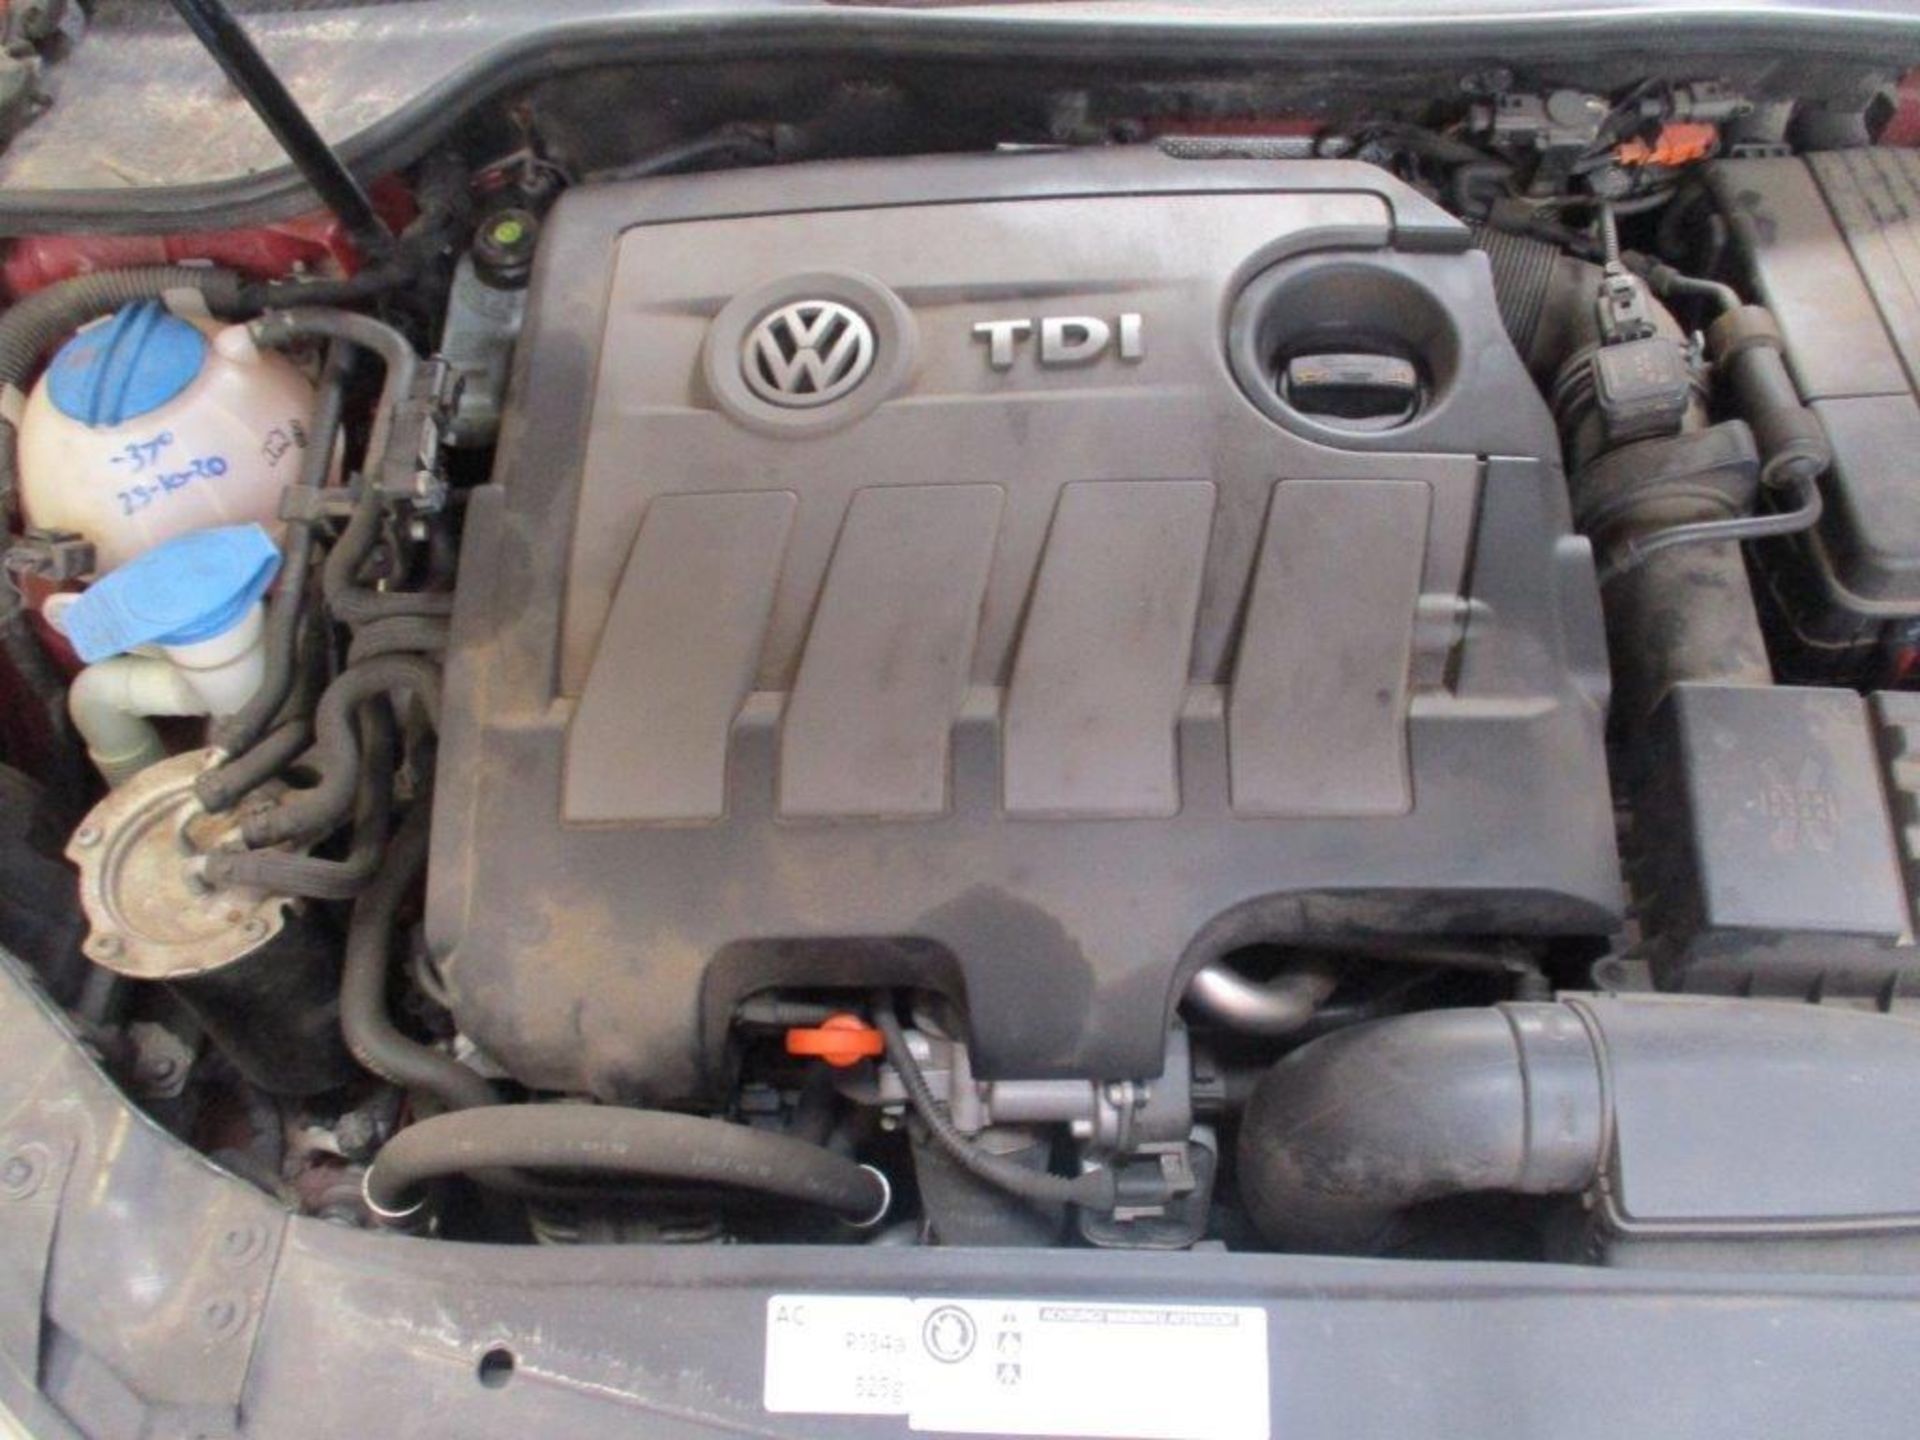 12 12 VW Golf Match TDI Bluetect - Image 7 of 28